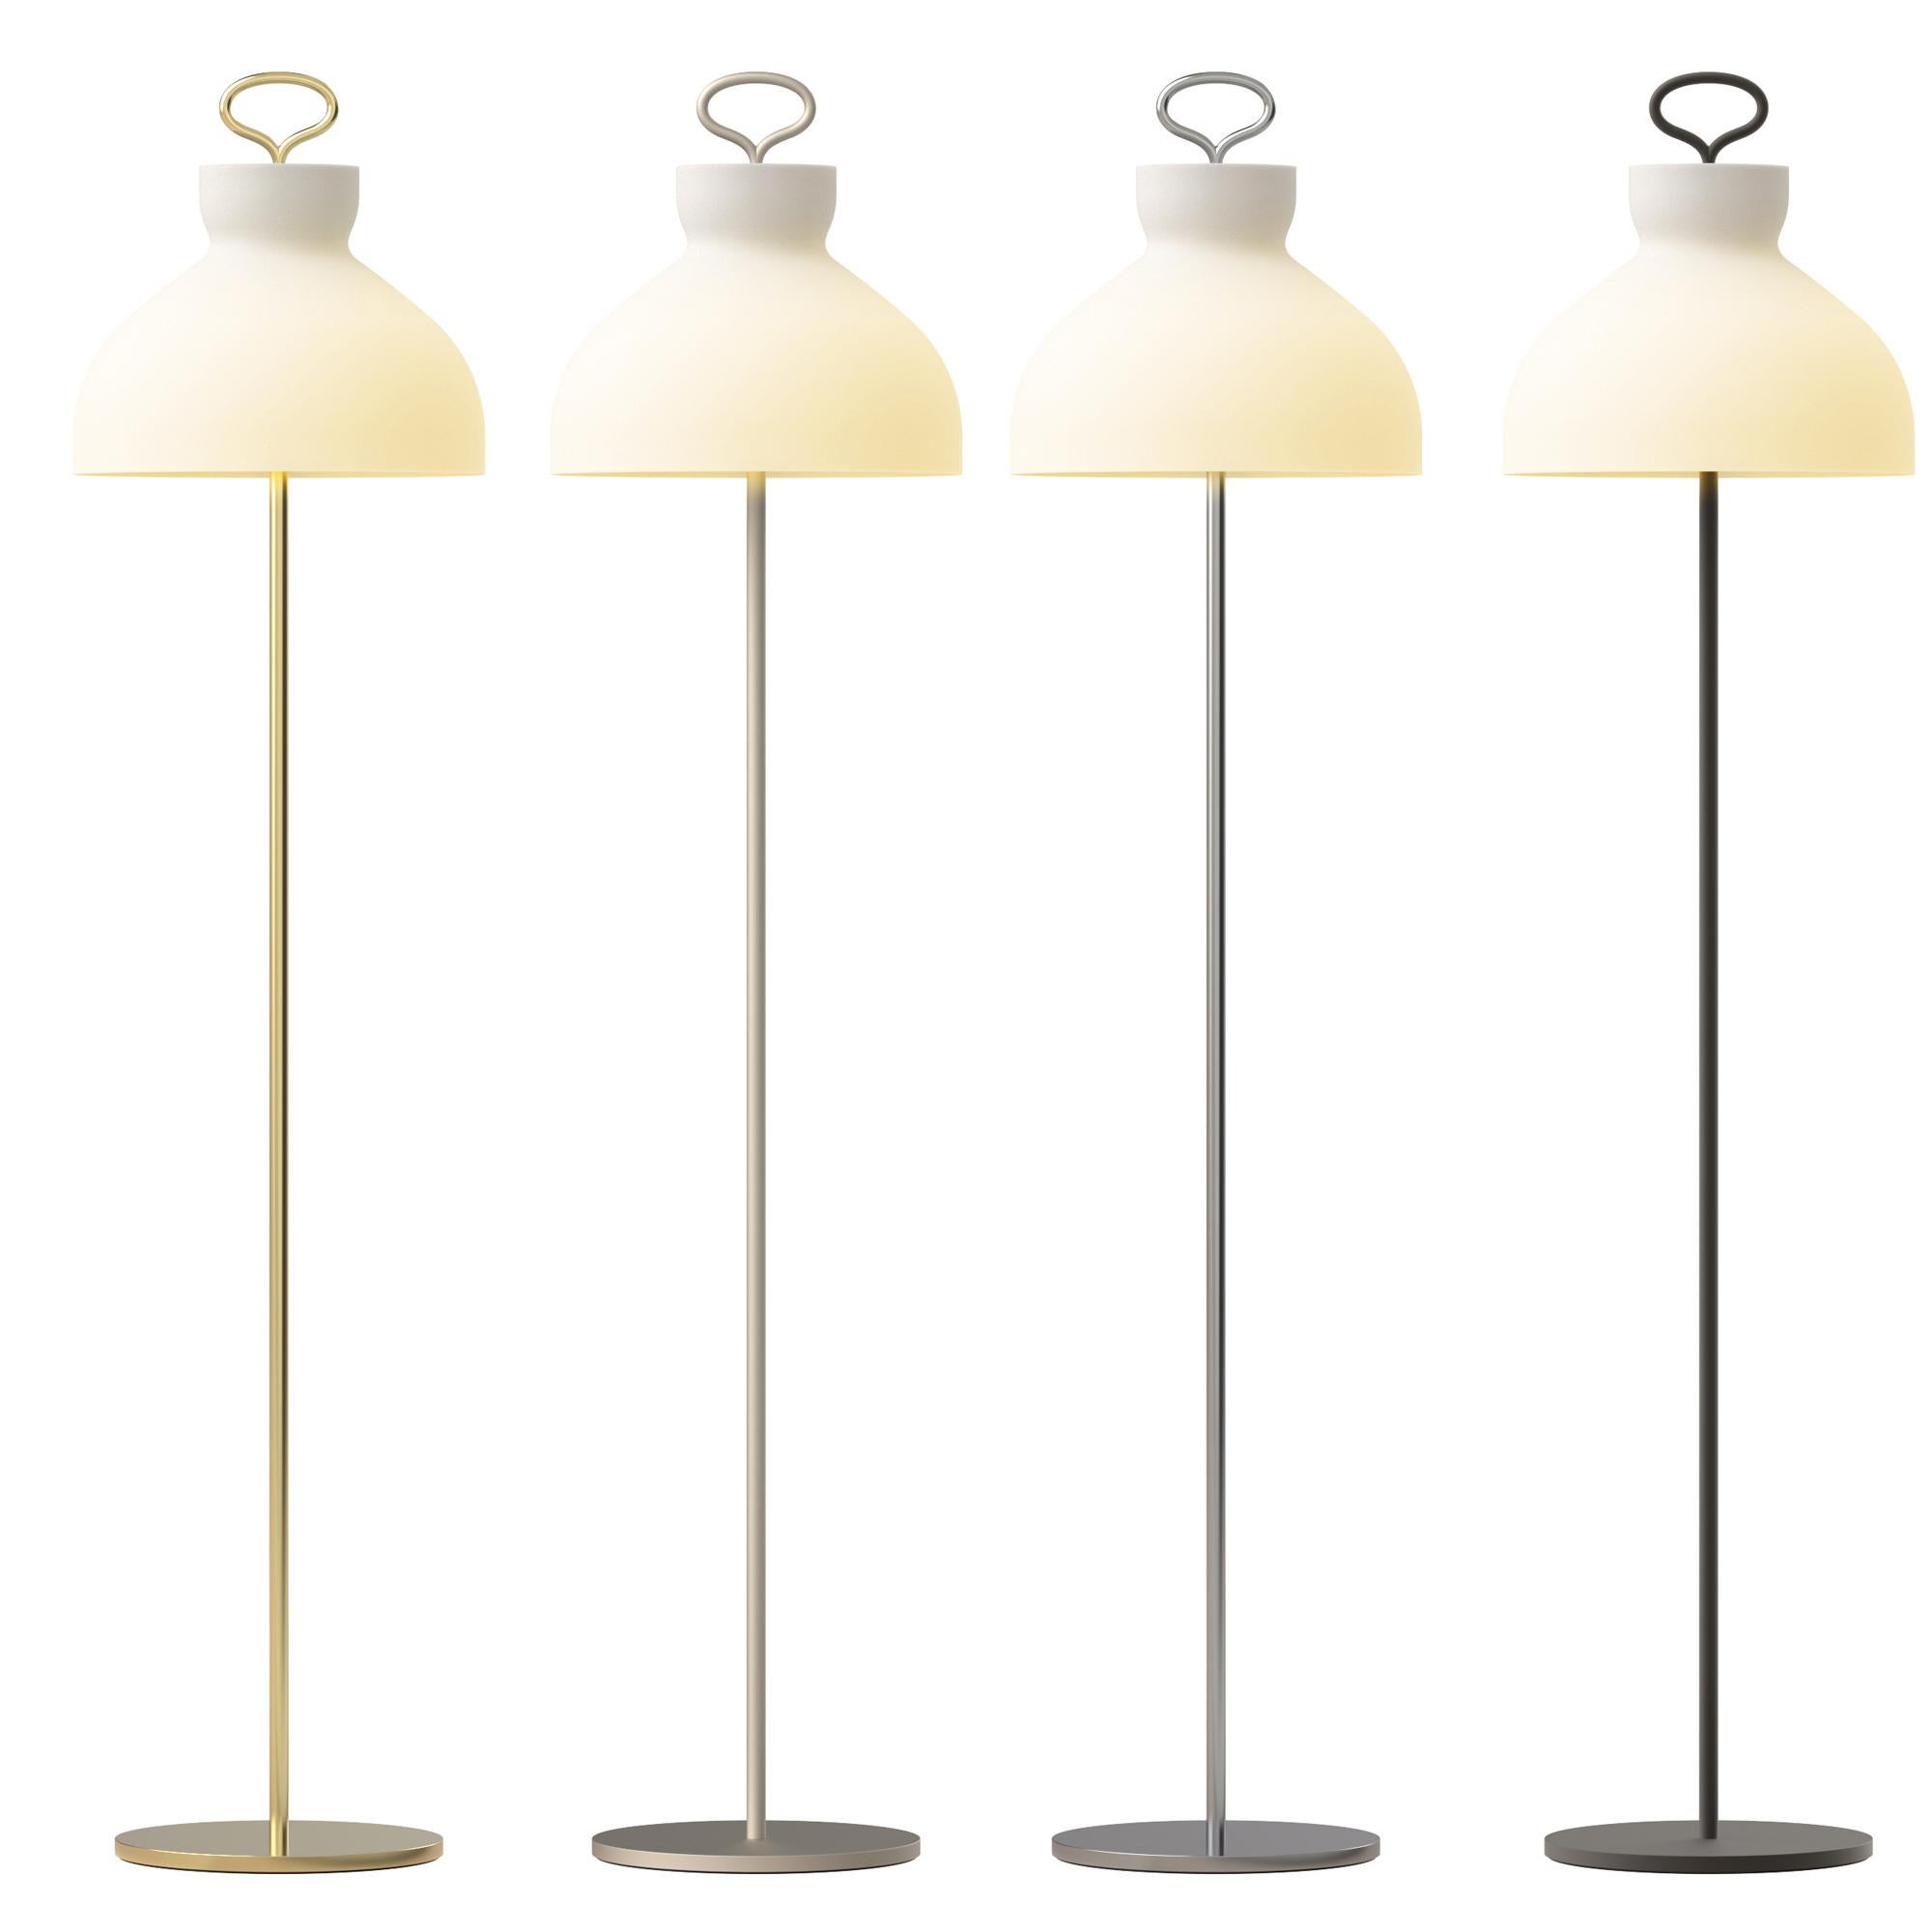 Italian Ignazio Gardella 'Arenzano Terra' Floor Lamp in Satin Nickel and Glass For Sale